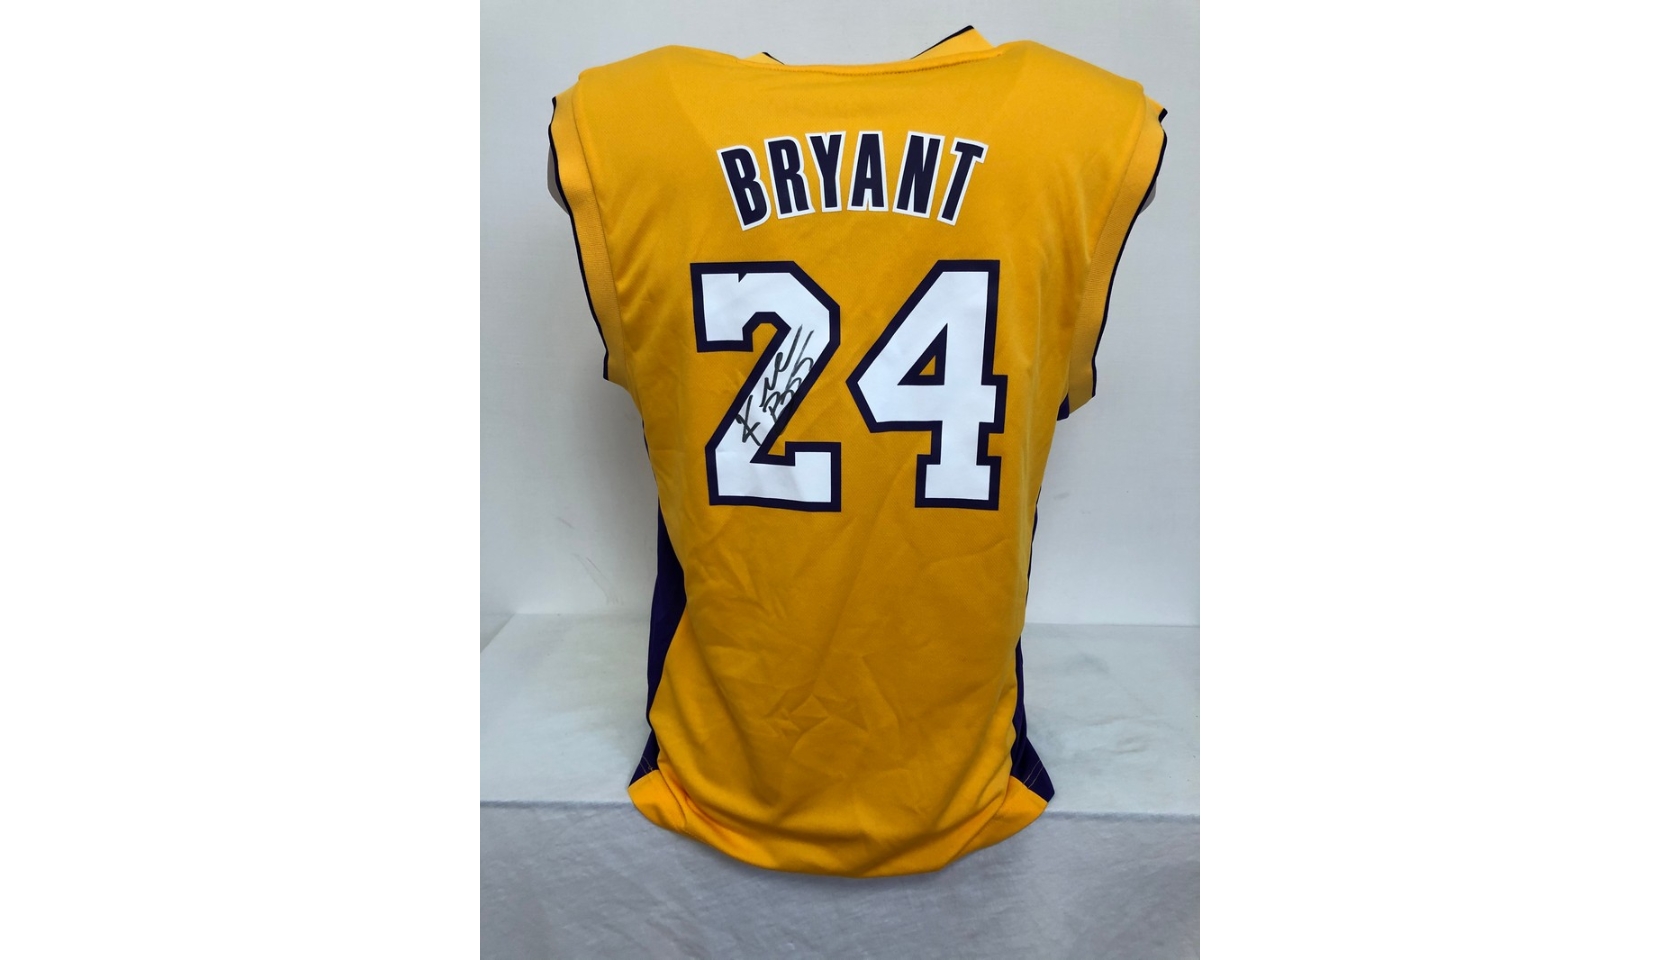 Kobe Bryant Signed USA Team Jersey - CharityStars